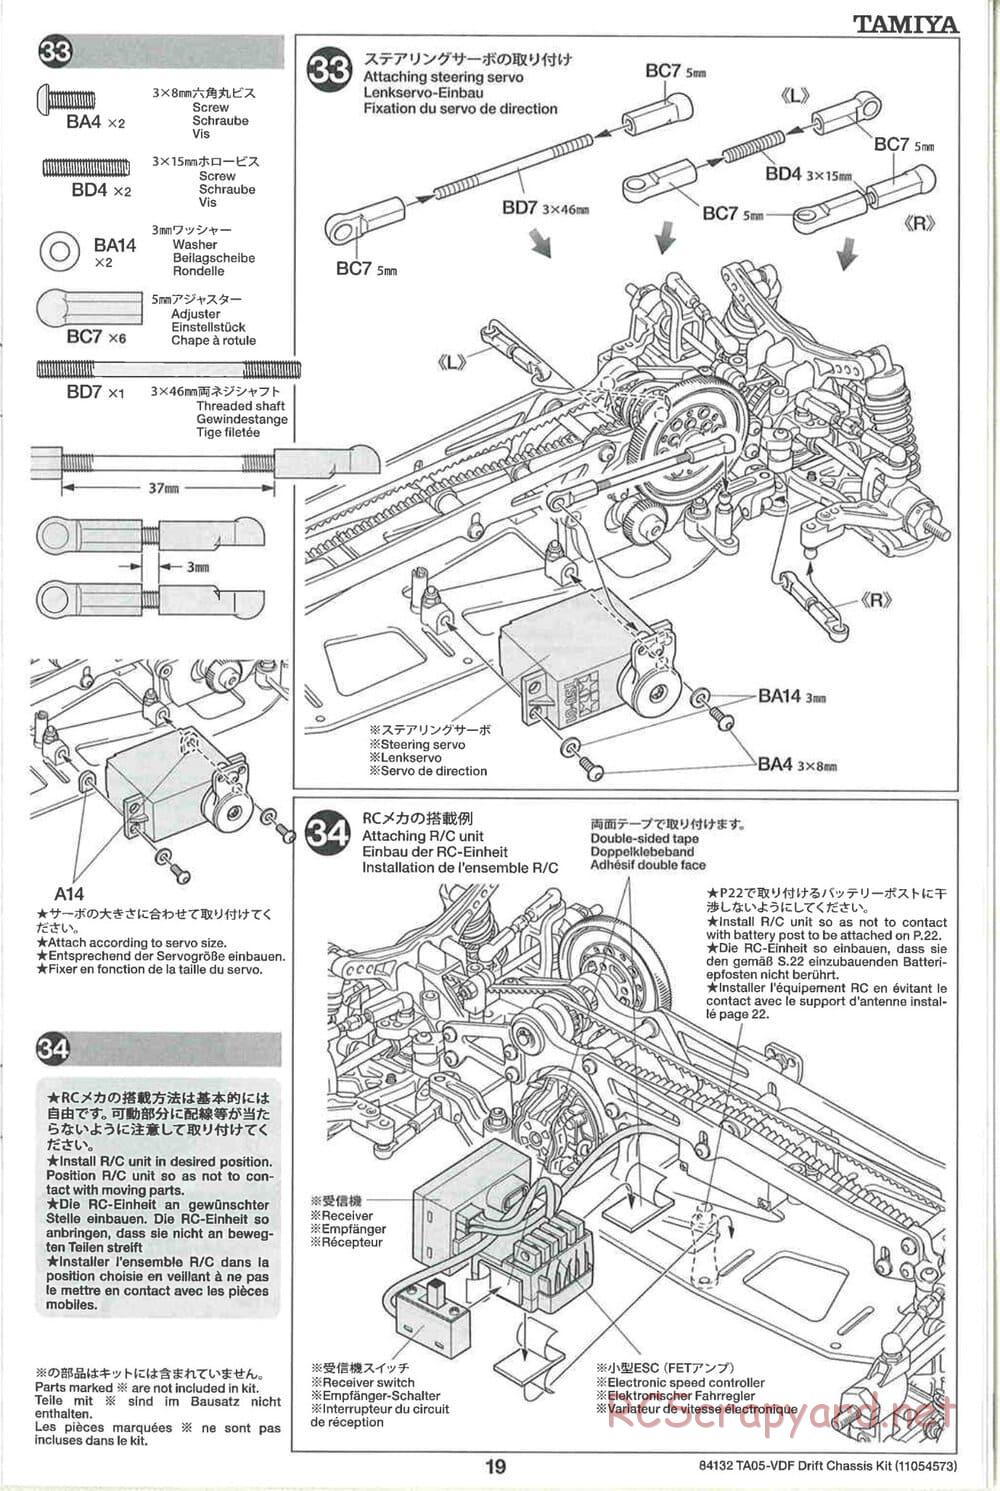 Tamiya - TA05-VDF Drift Spec Chassis - Manual - Page 19